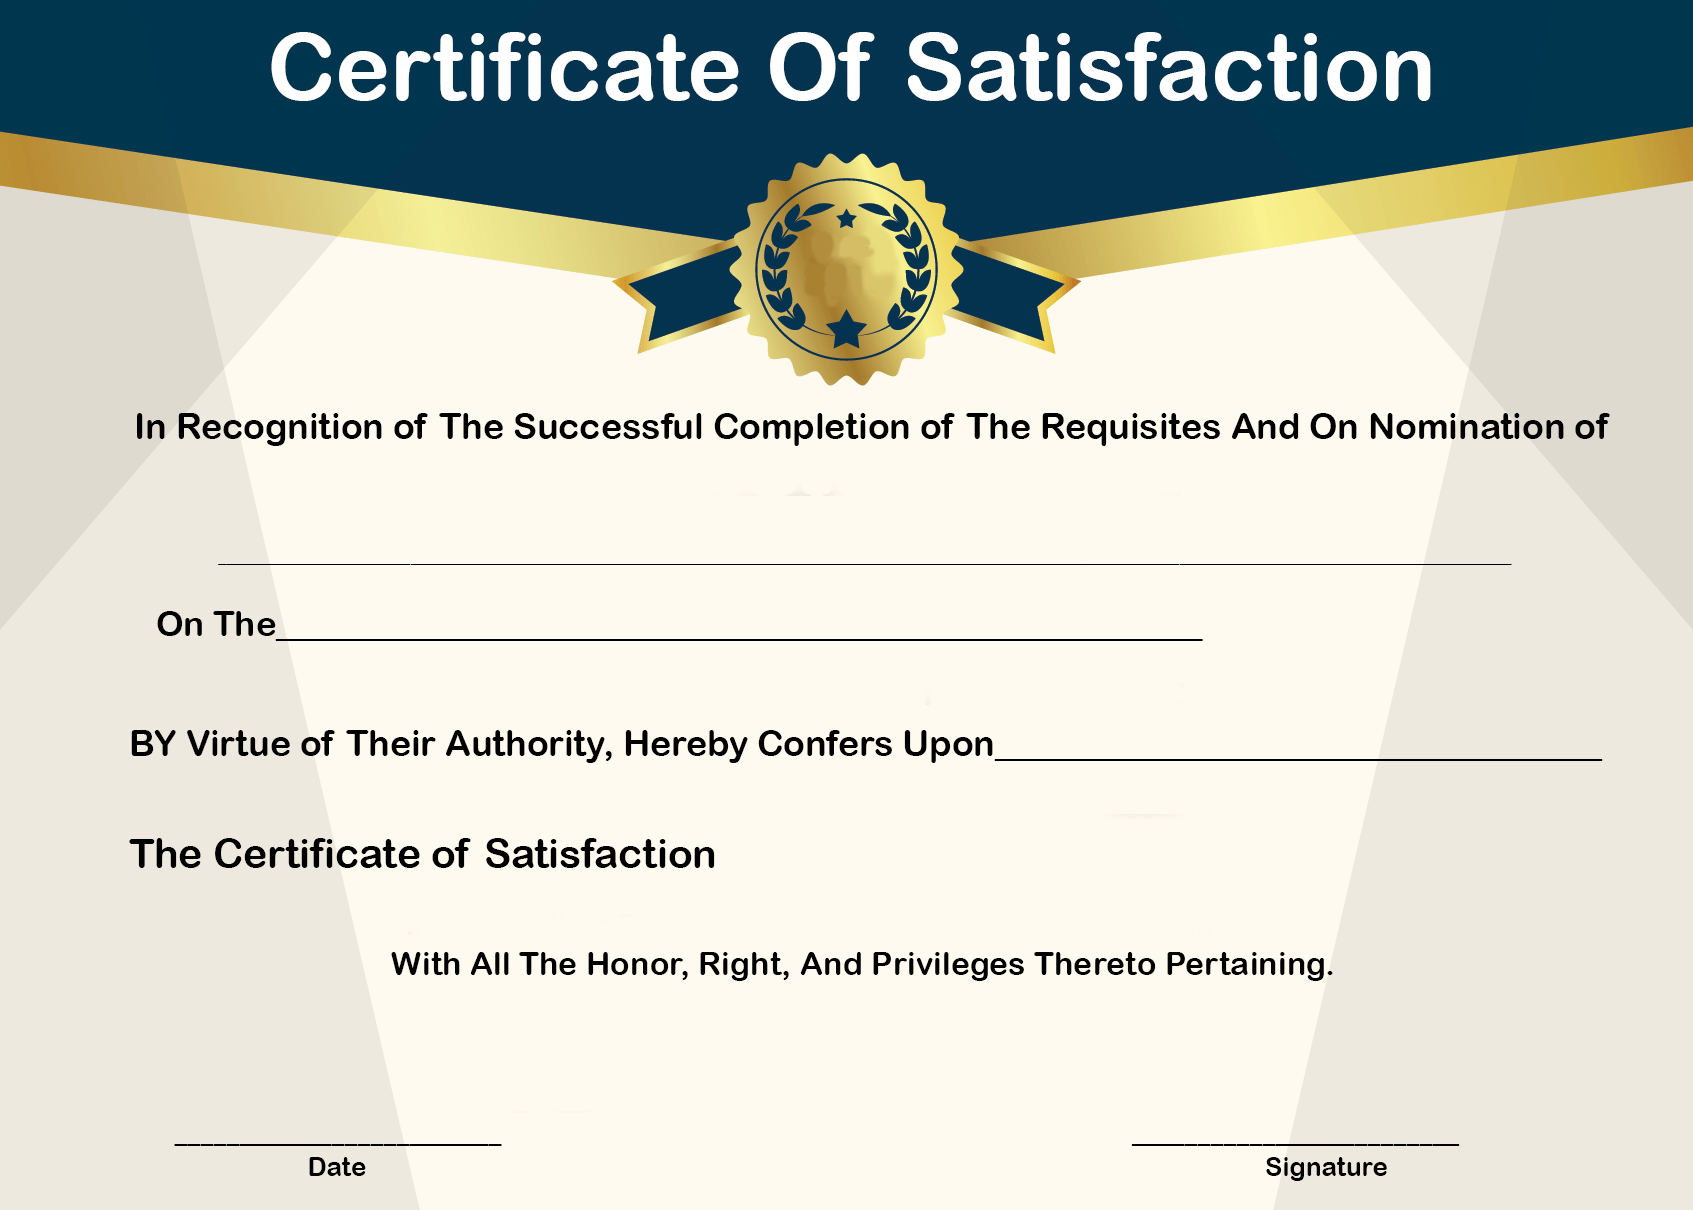 Certificate of Satisfaction Template 